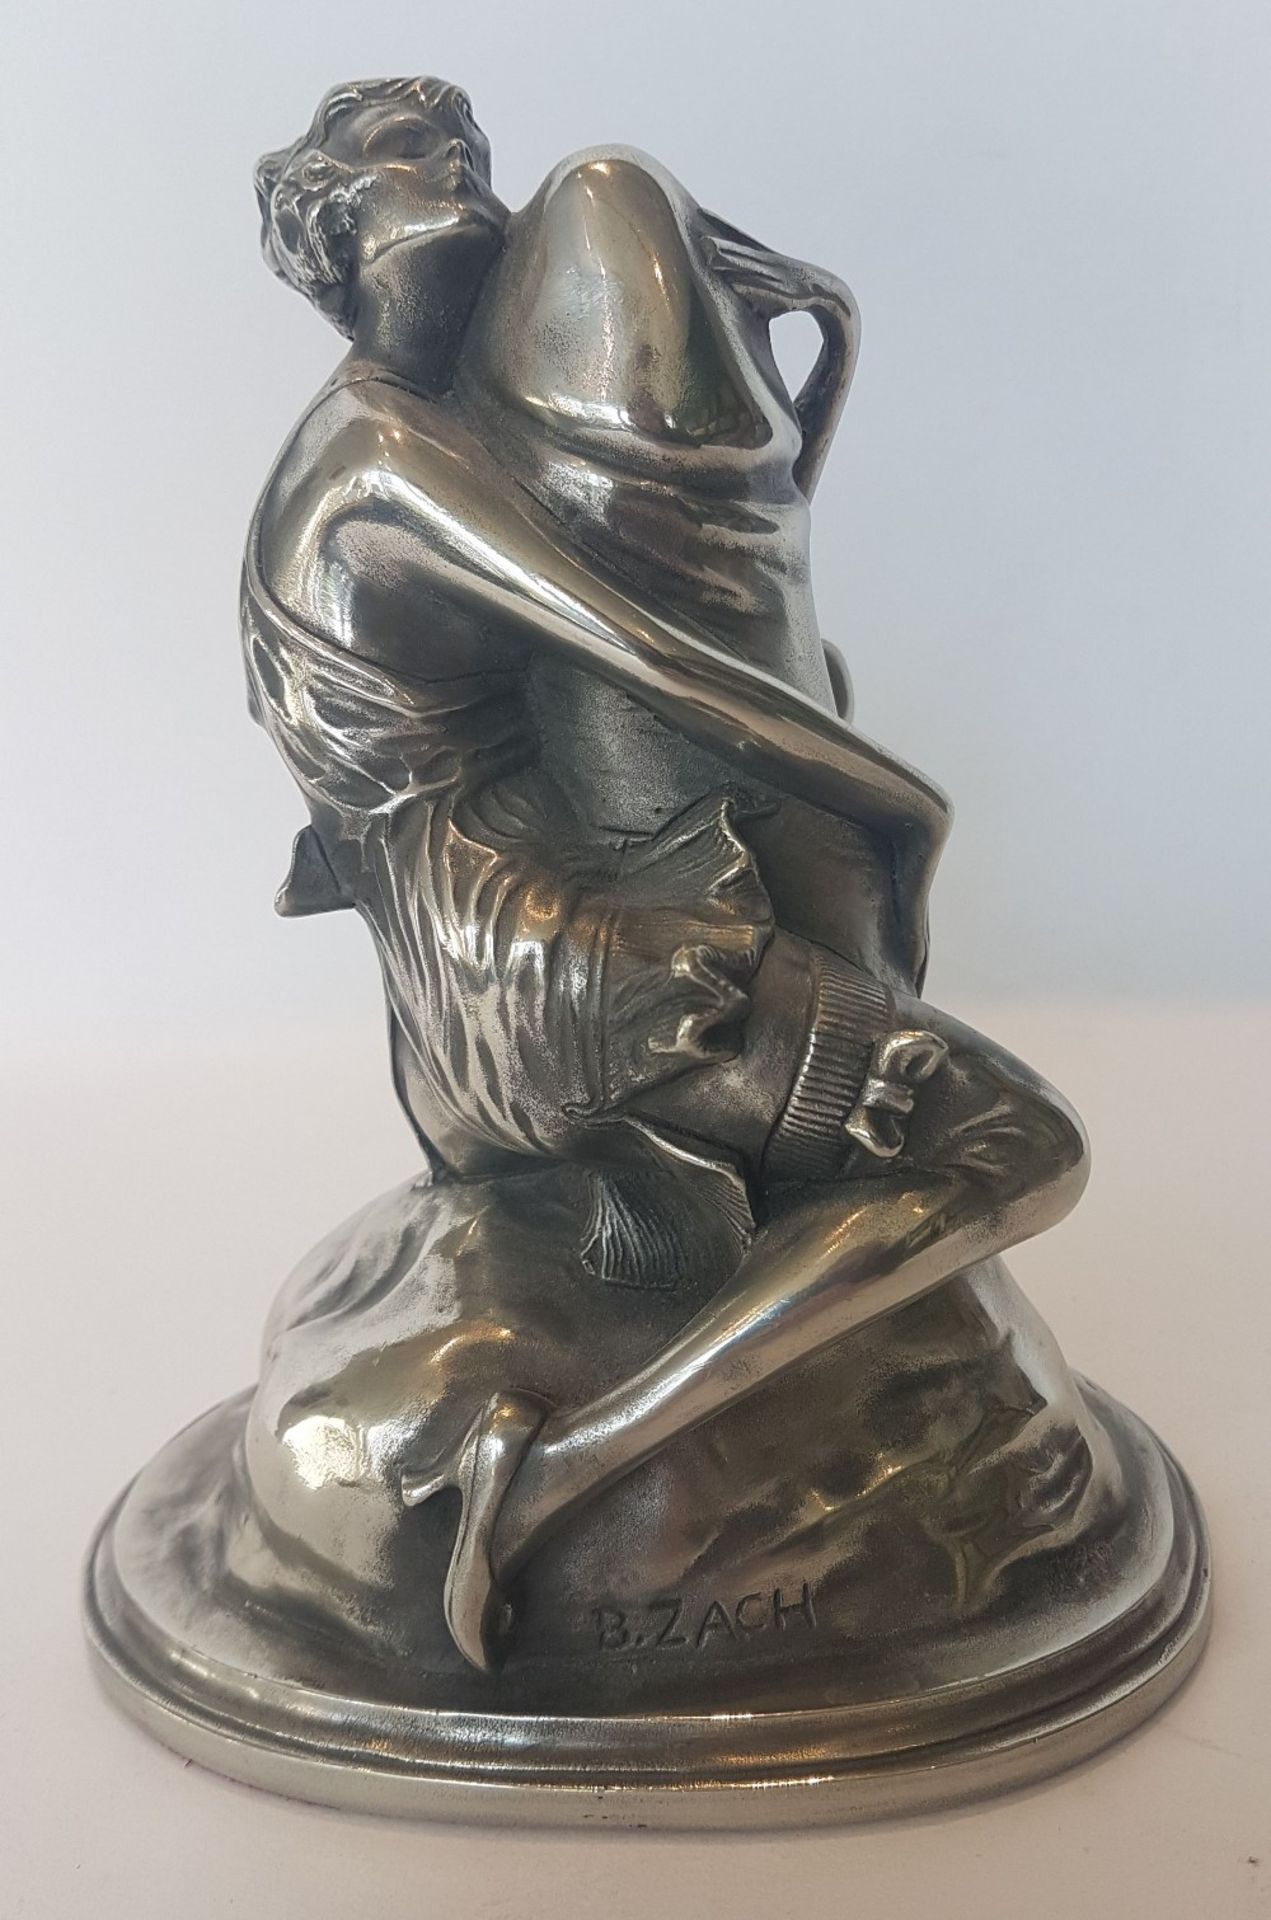 Bruno Zach (1891-1935)The embrace; Silvery metal sculpture. Signed. 16 x 13 x 8 cm